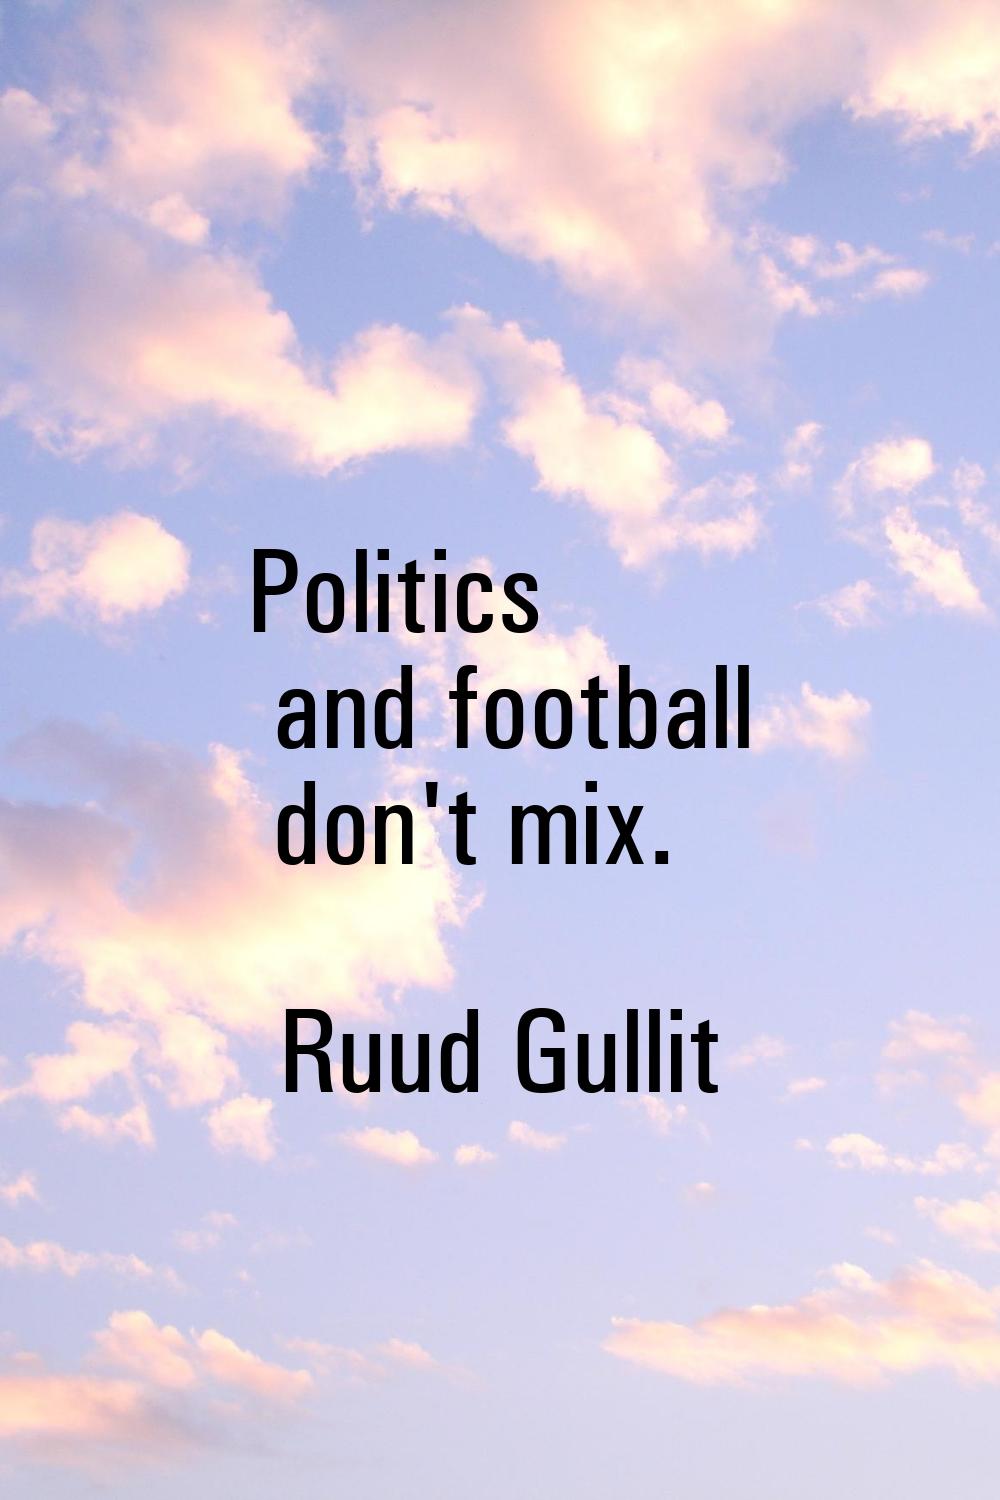 Politics and football don't mix.